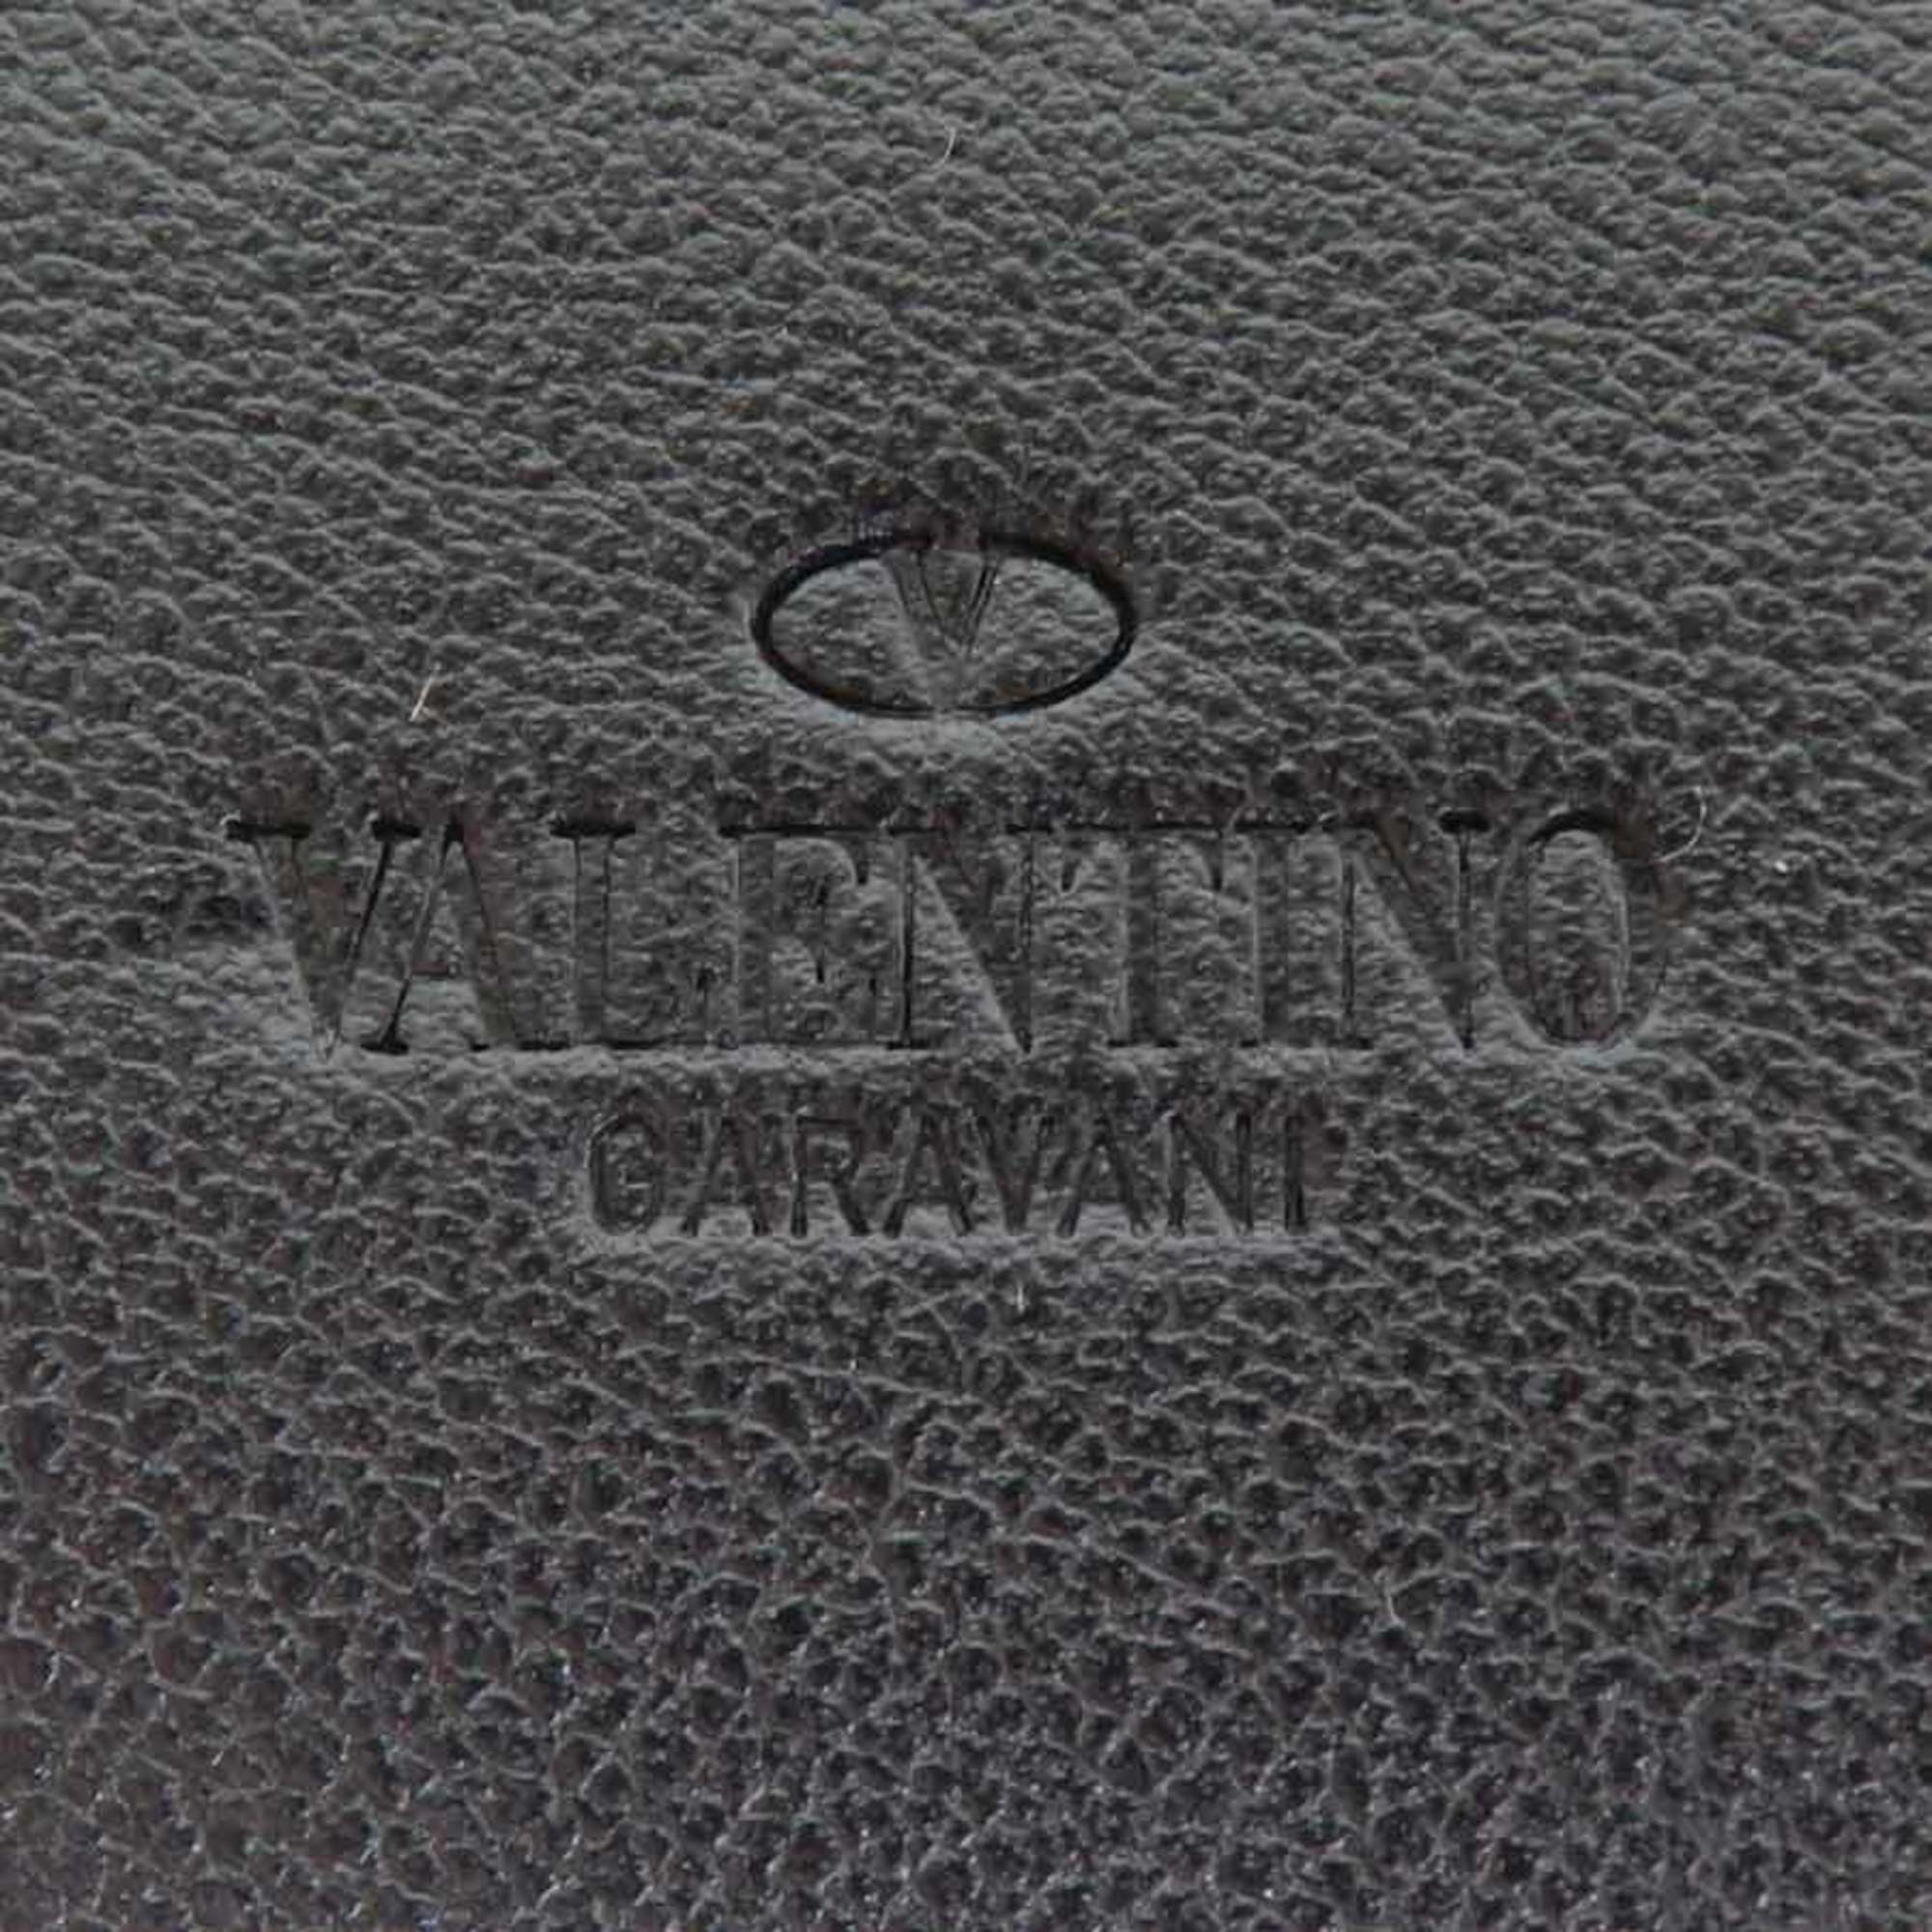 Valentino Garavani Smartphone Case Pouch Japan Limited Leather Black x White Red Unisex